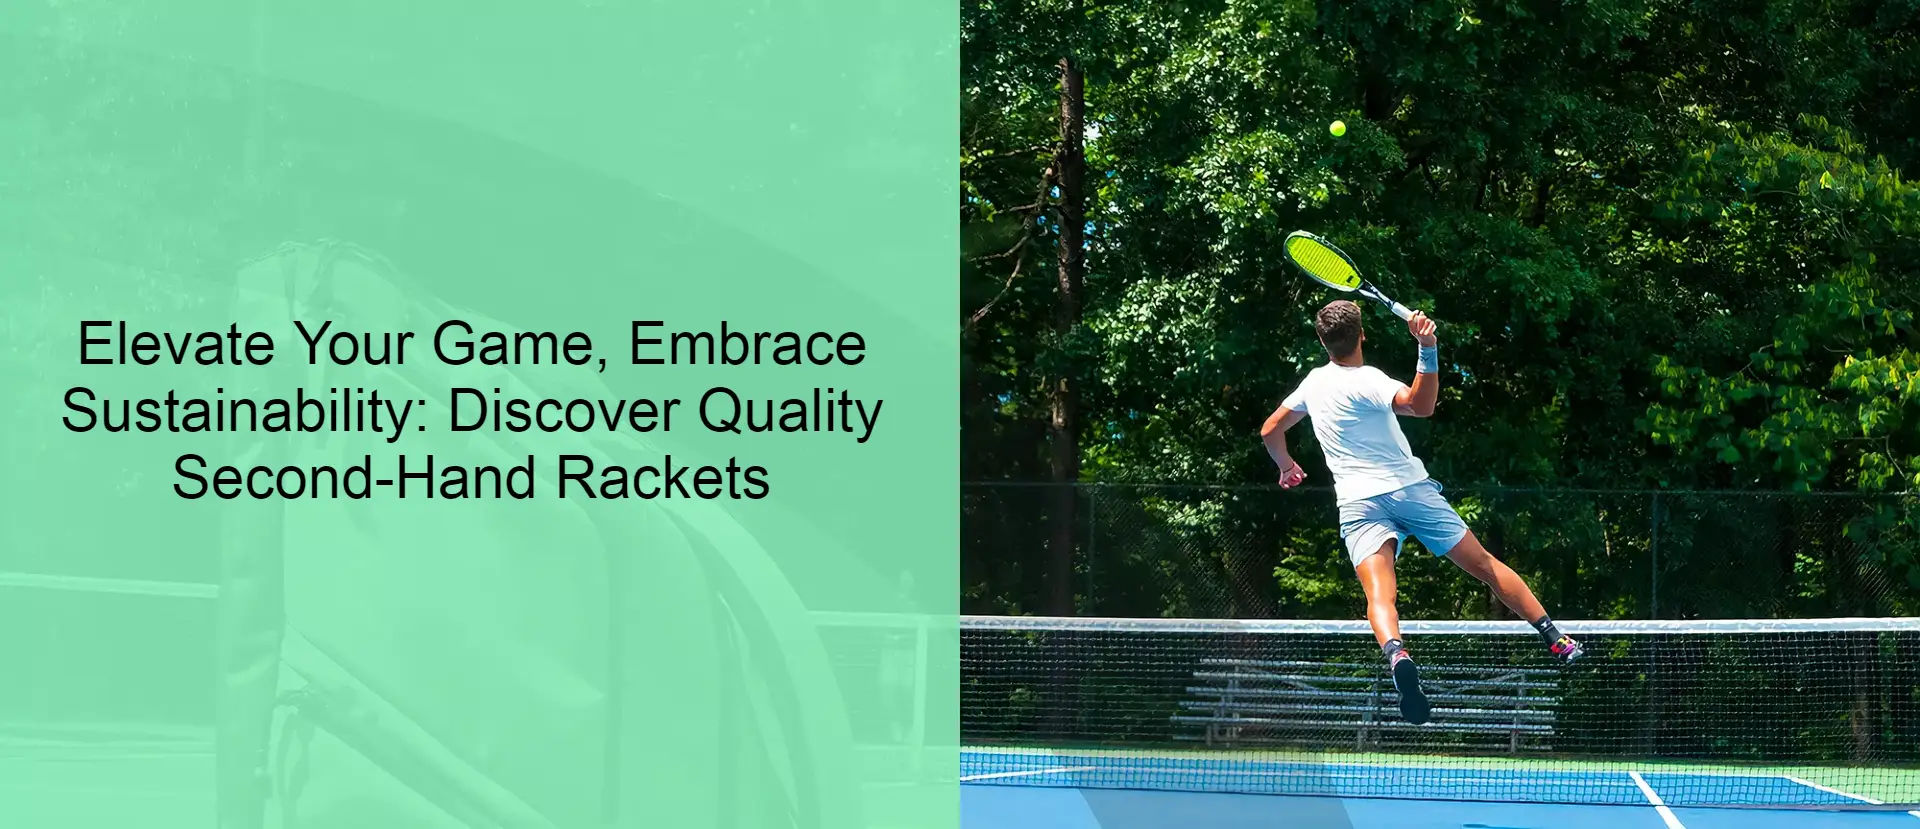 Pre owned tennis rackets desktop feature image